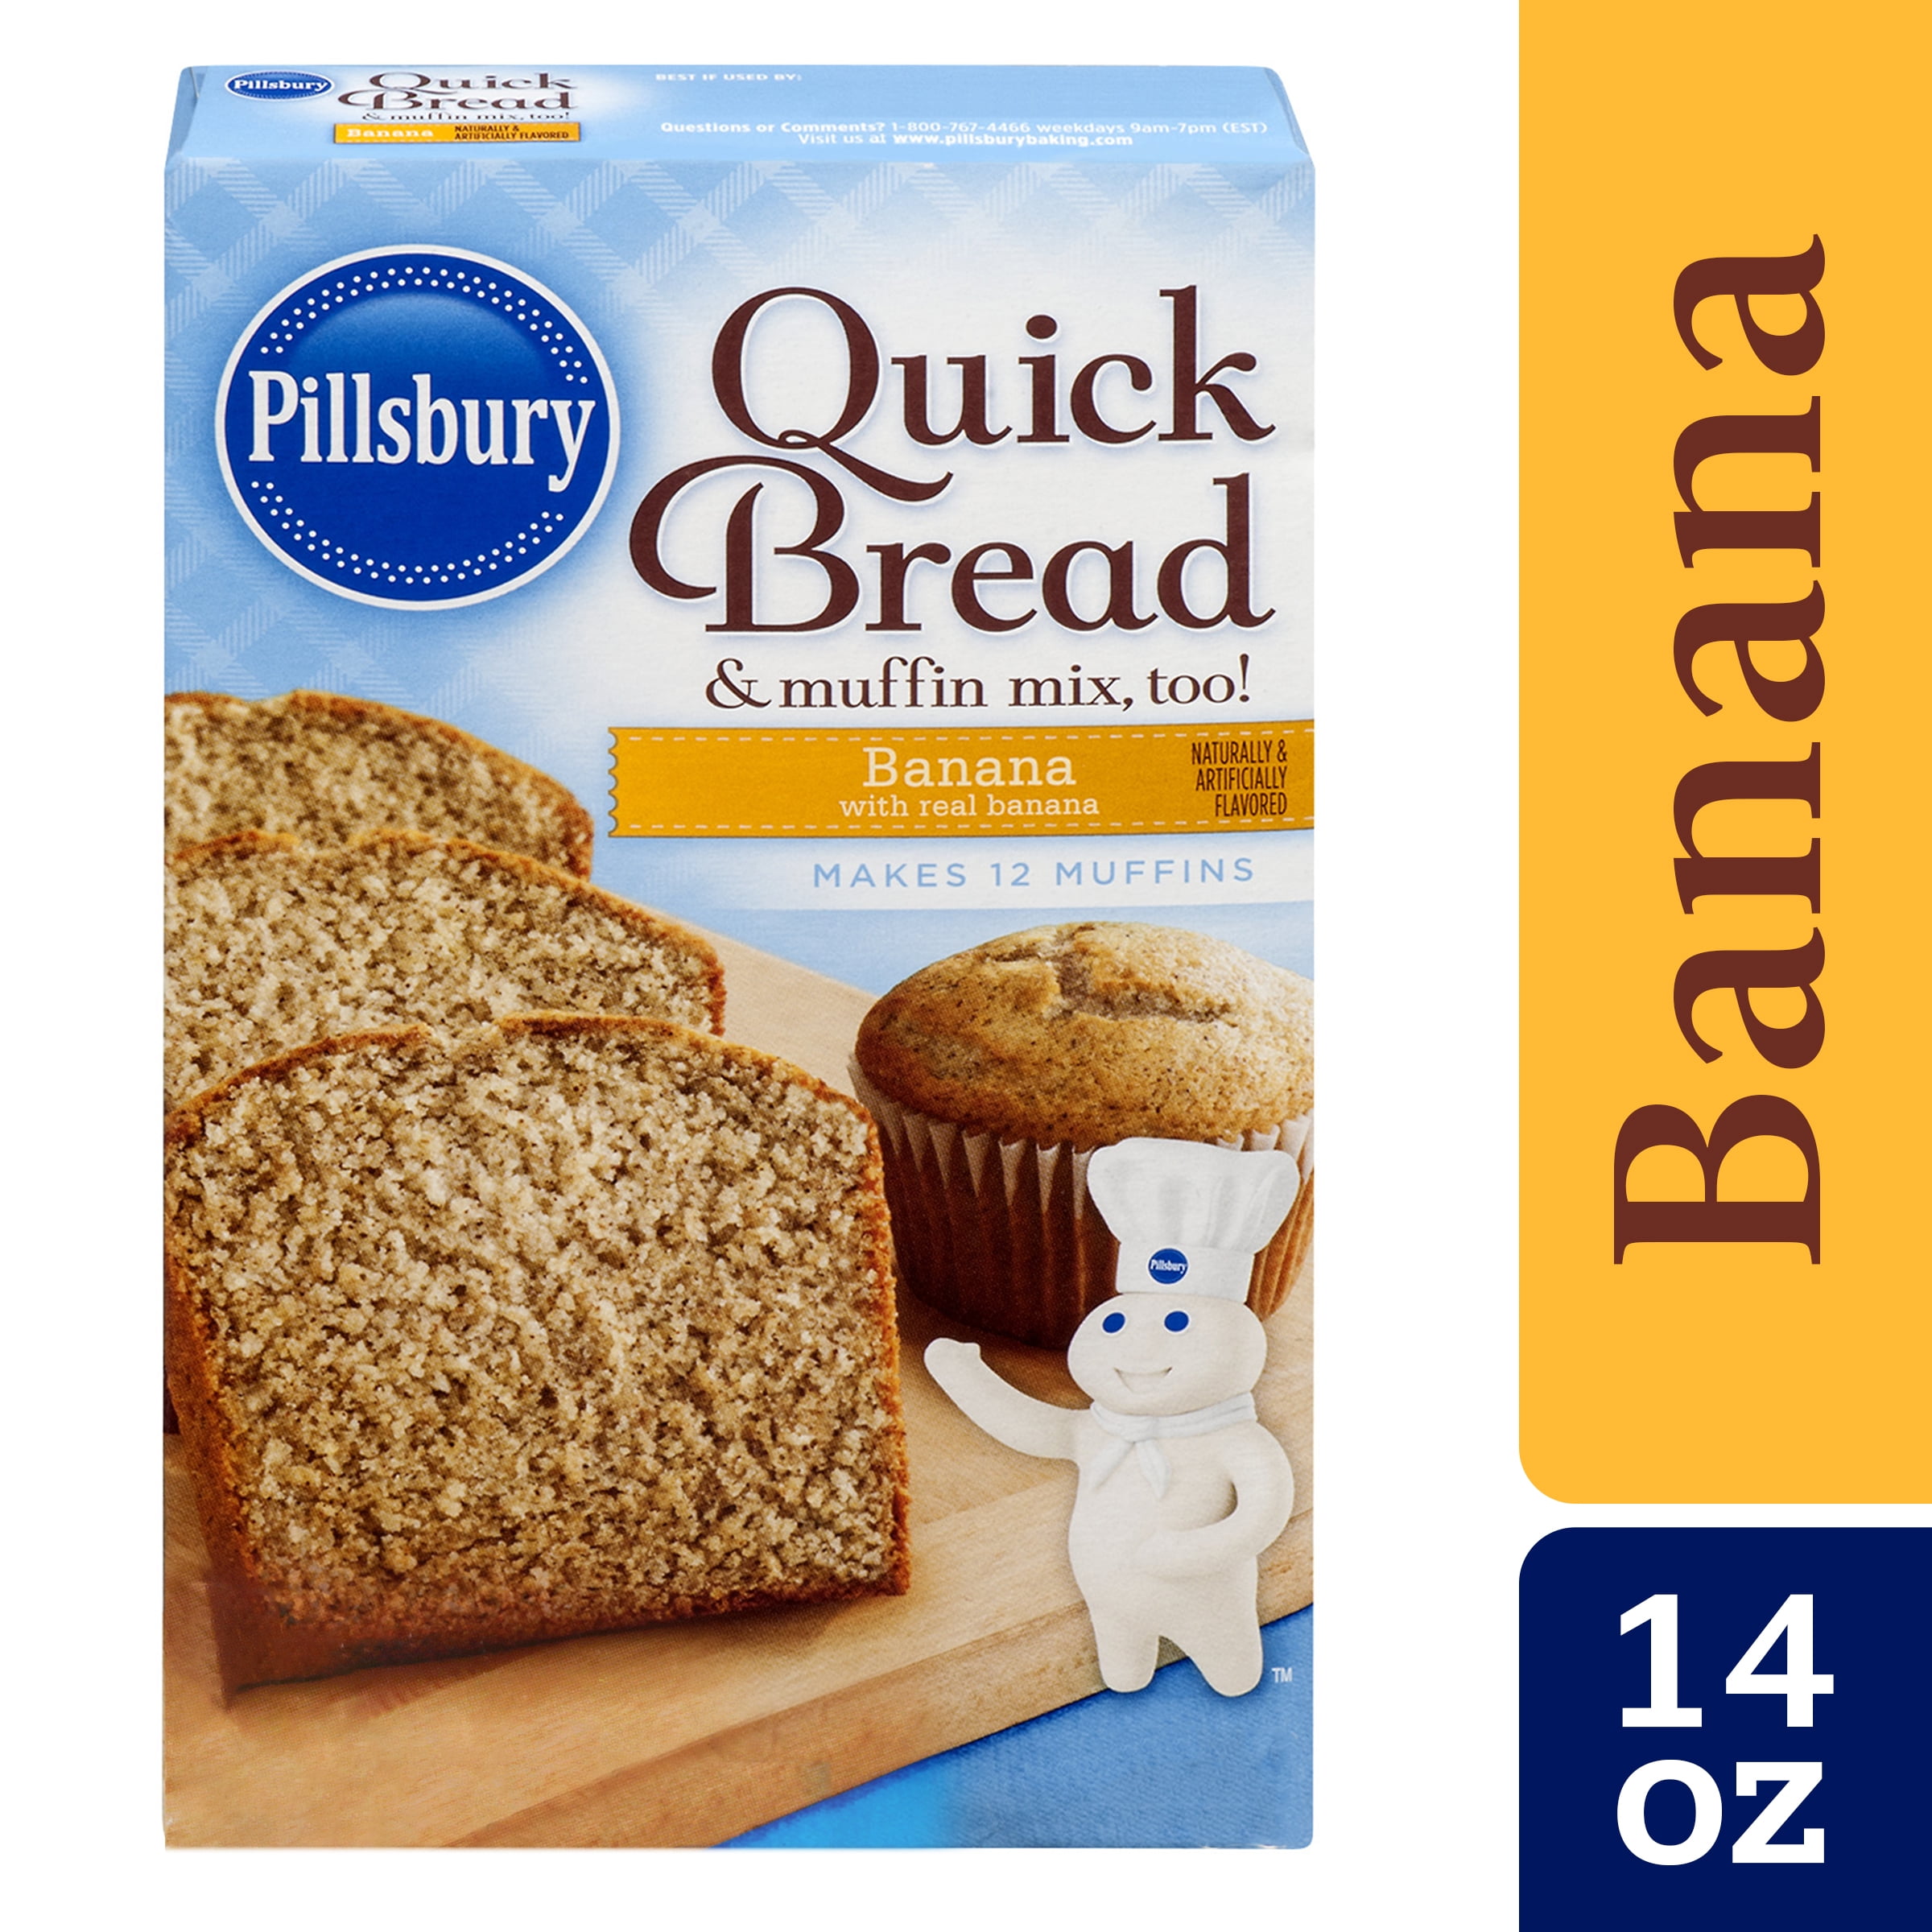 Pillsbury Quick Bread Banana Bread and Muffin Mix, 14 Oz Box